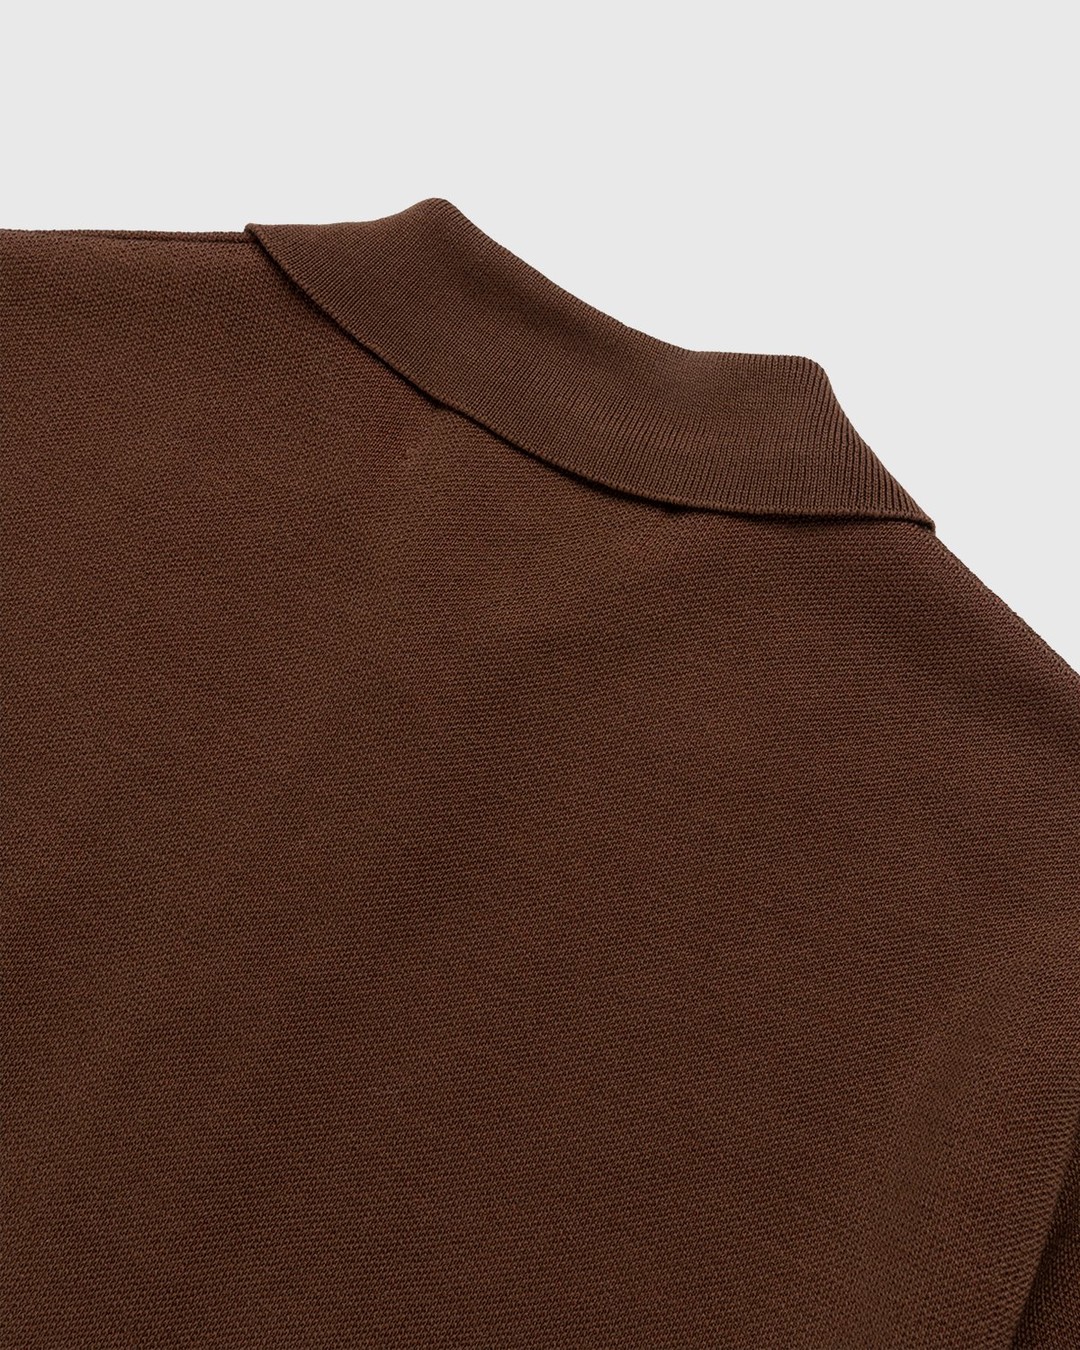 Carne Bollente – Upside Down Knit Shirt Brown - Knitwear - Brown - Image 3